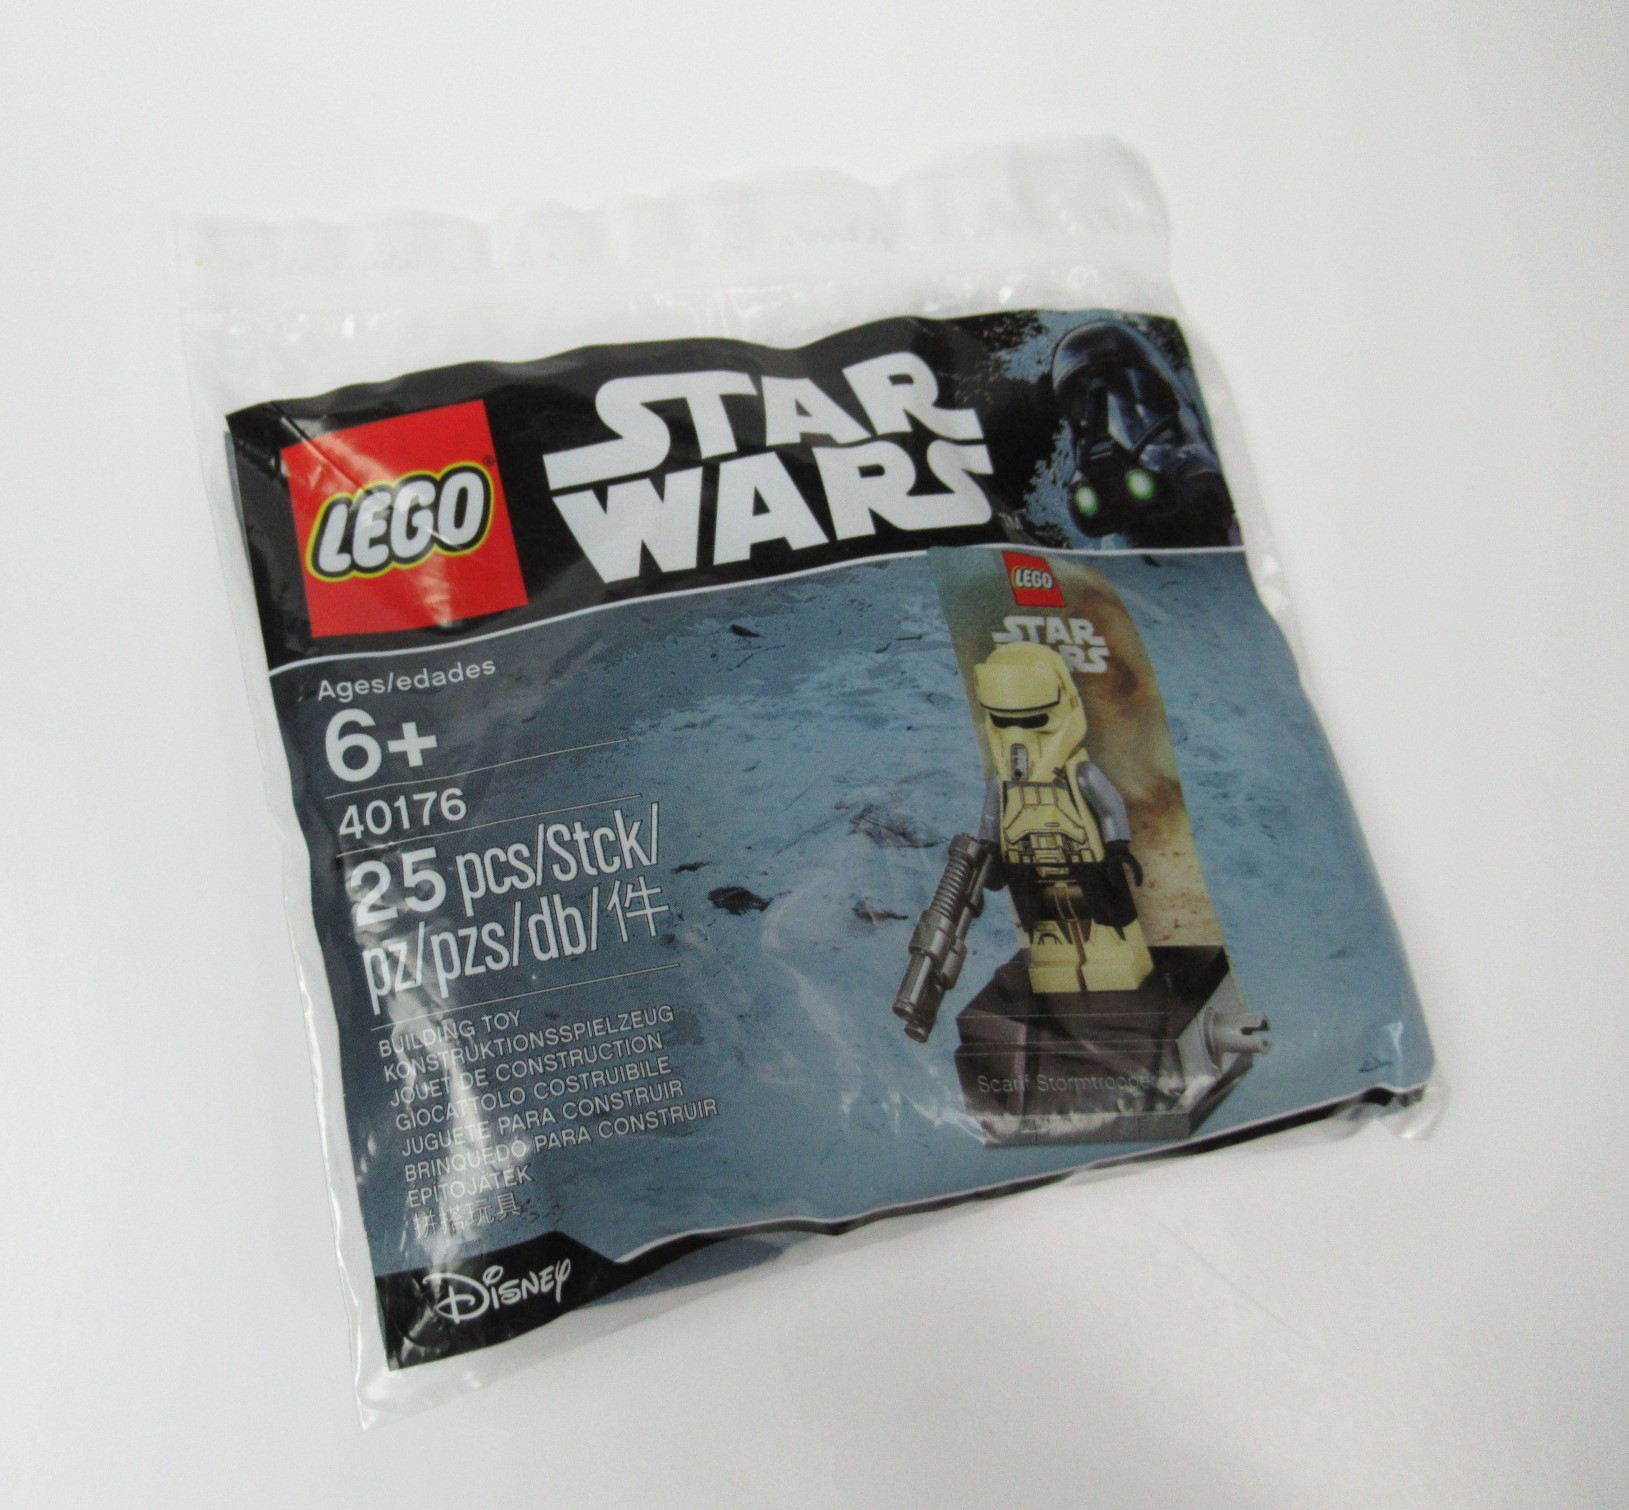 Pilt LEGO® Star Wars 40176 Star Wars Scarif Stormtrooper Polybag